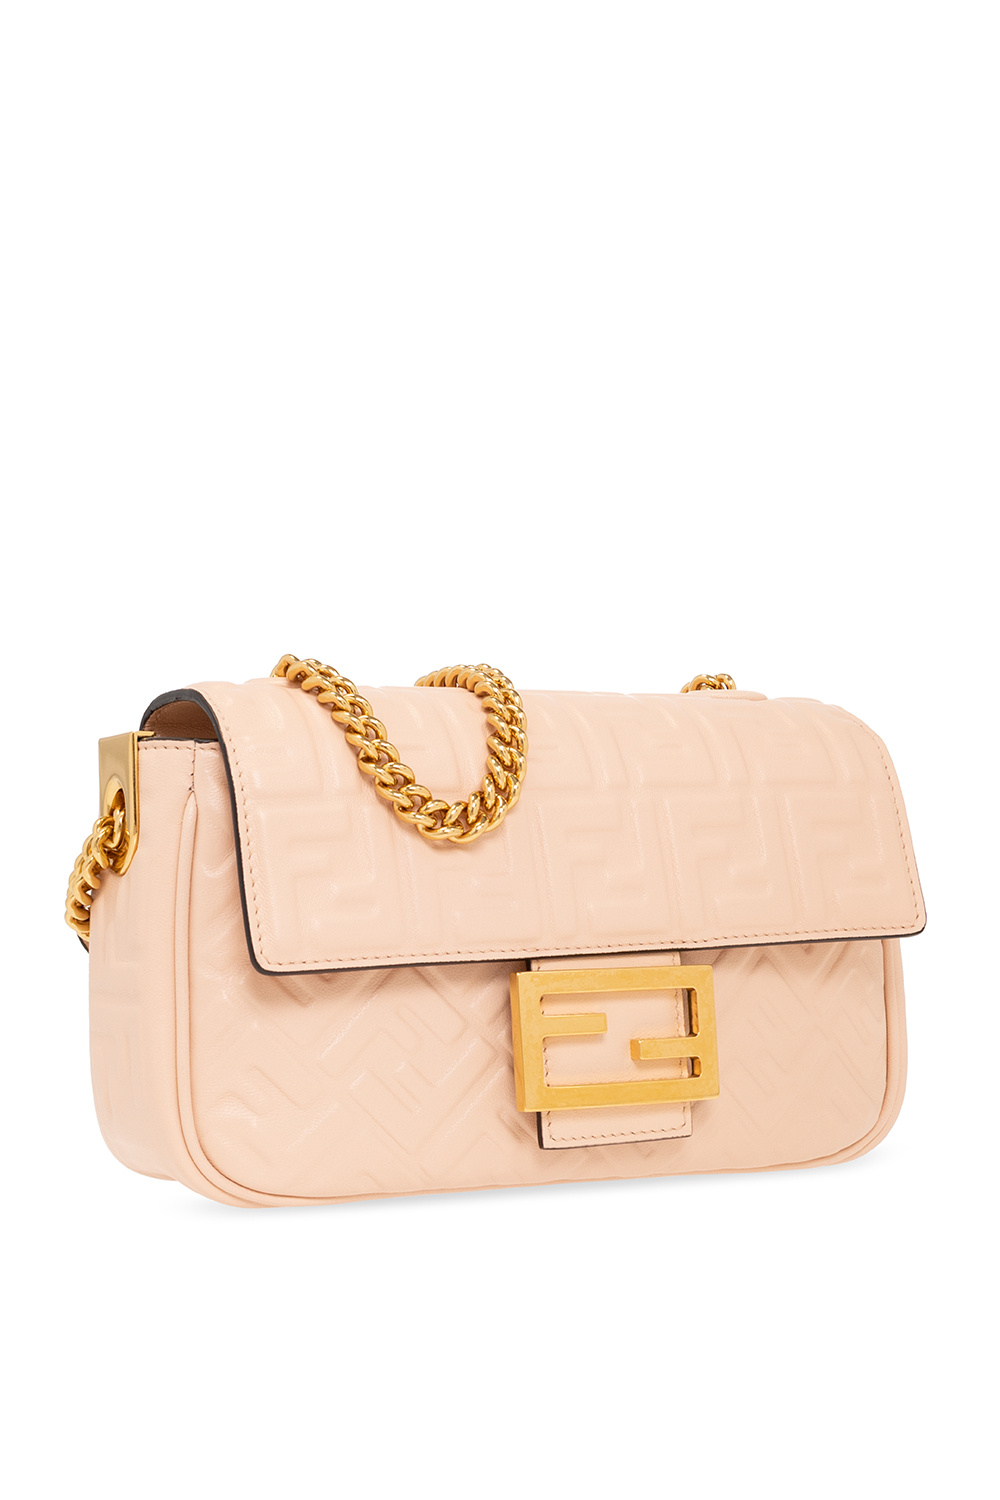 Fendi ’Baguette Midi’ shoulder bag